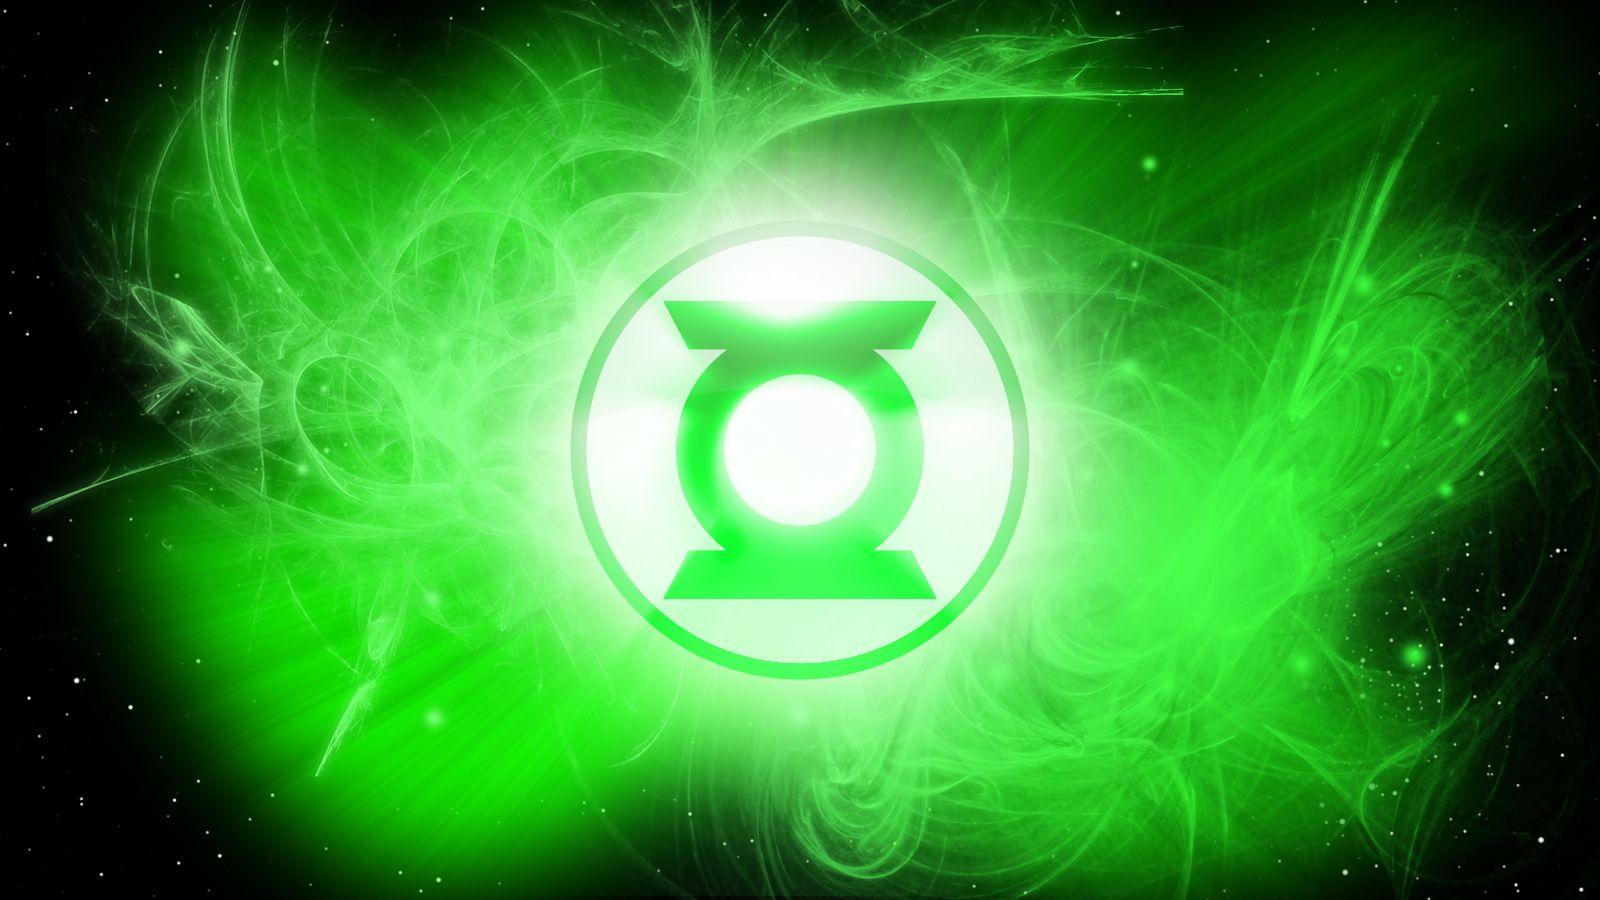 green lantern oath rhyme scheme